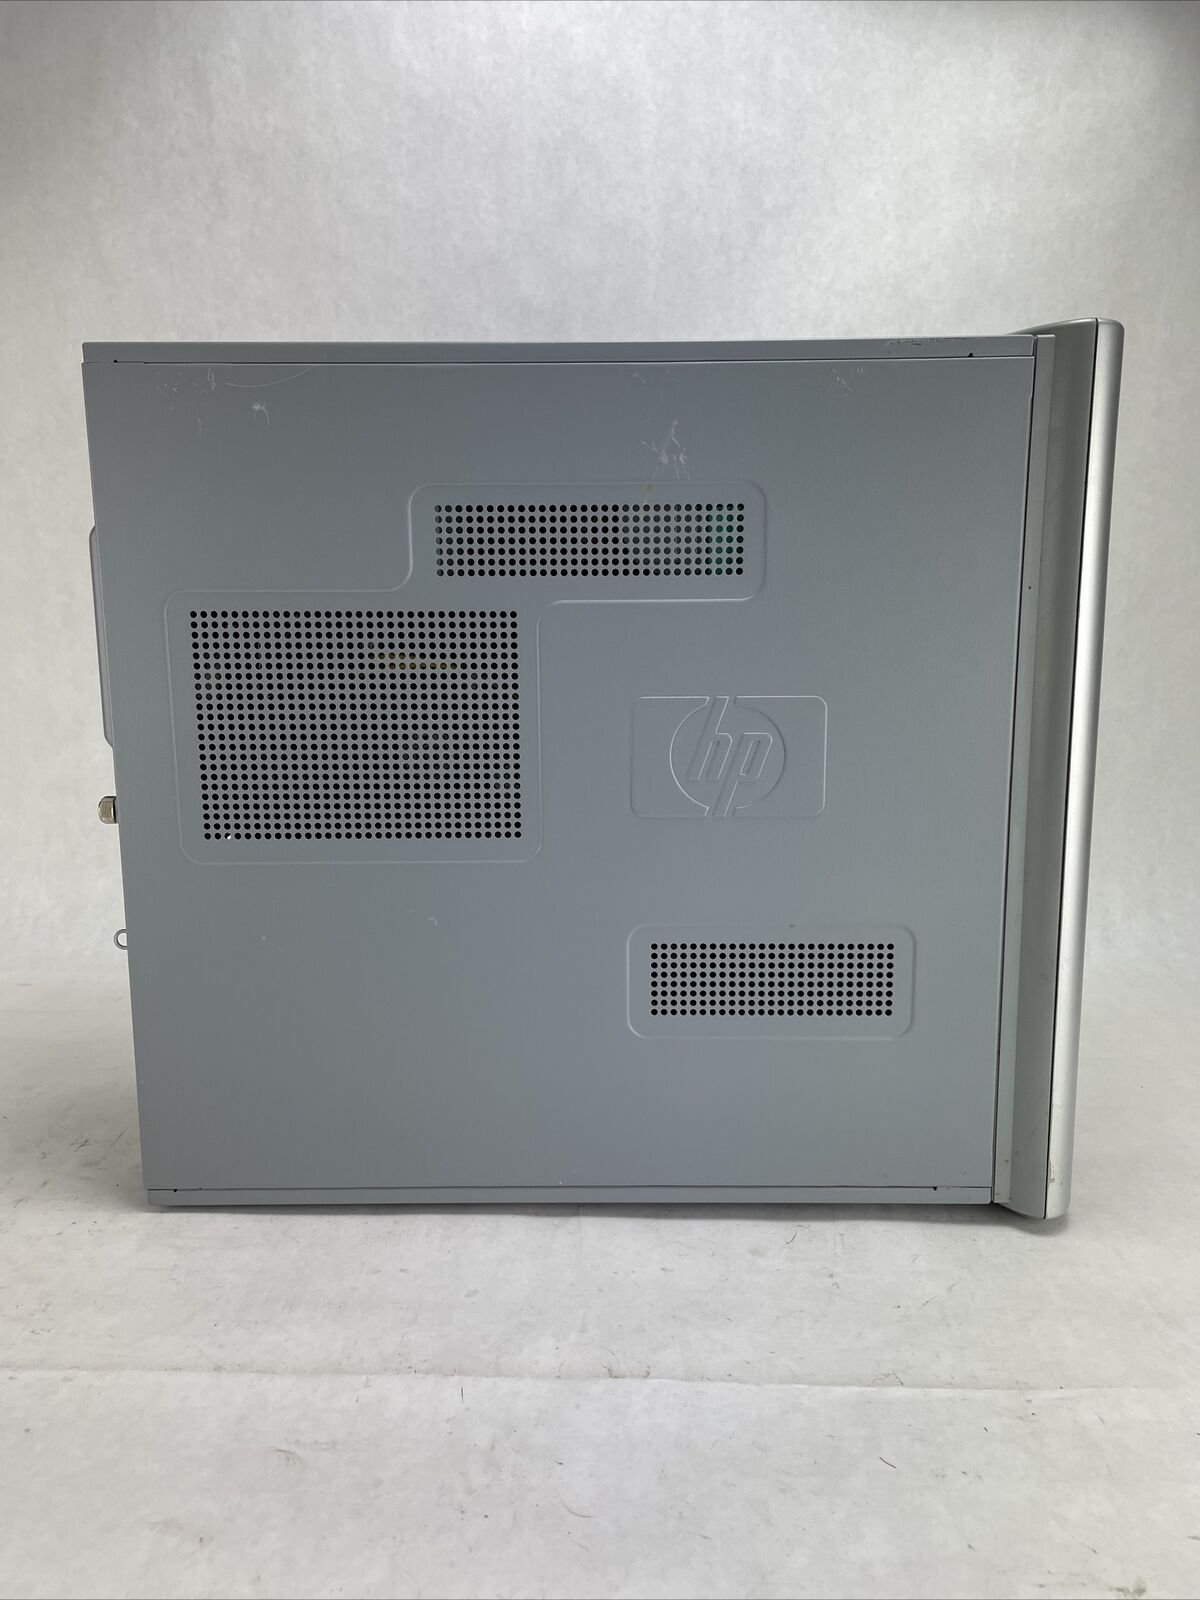 HP Pavilion a1330e MT AMD Athlon 3700+ 2.2GHz 512MB RAM No HDD No OS